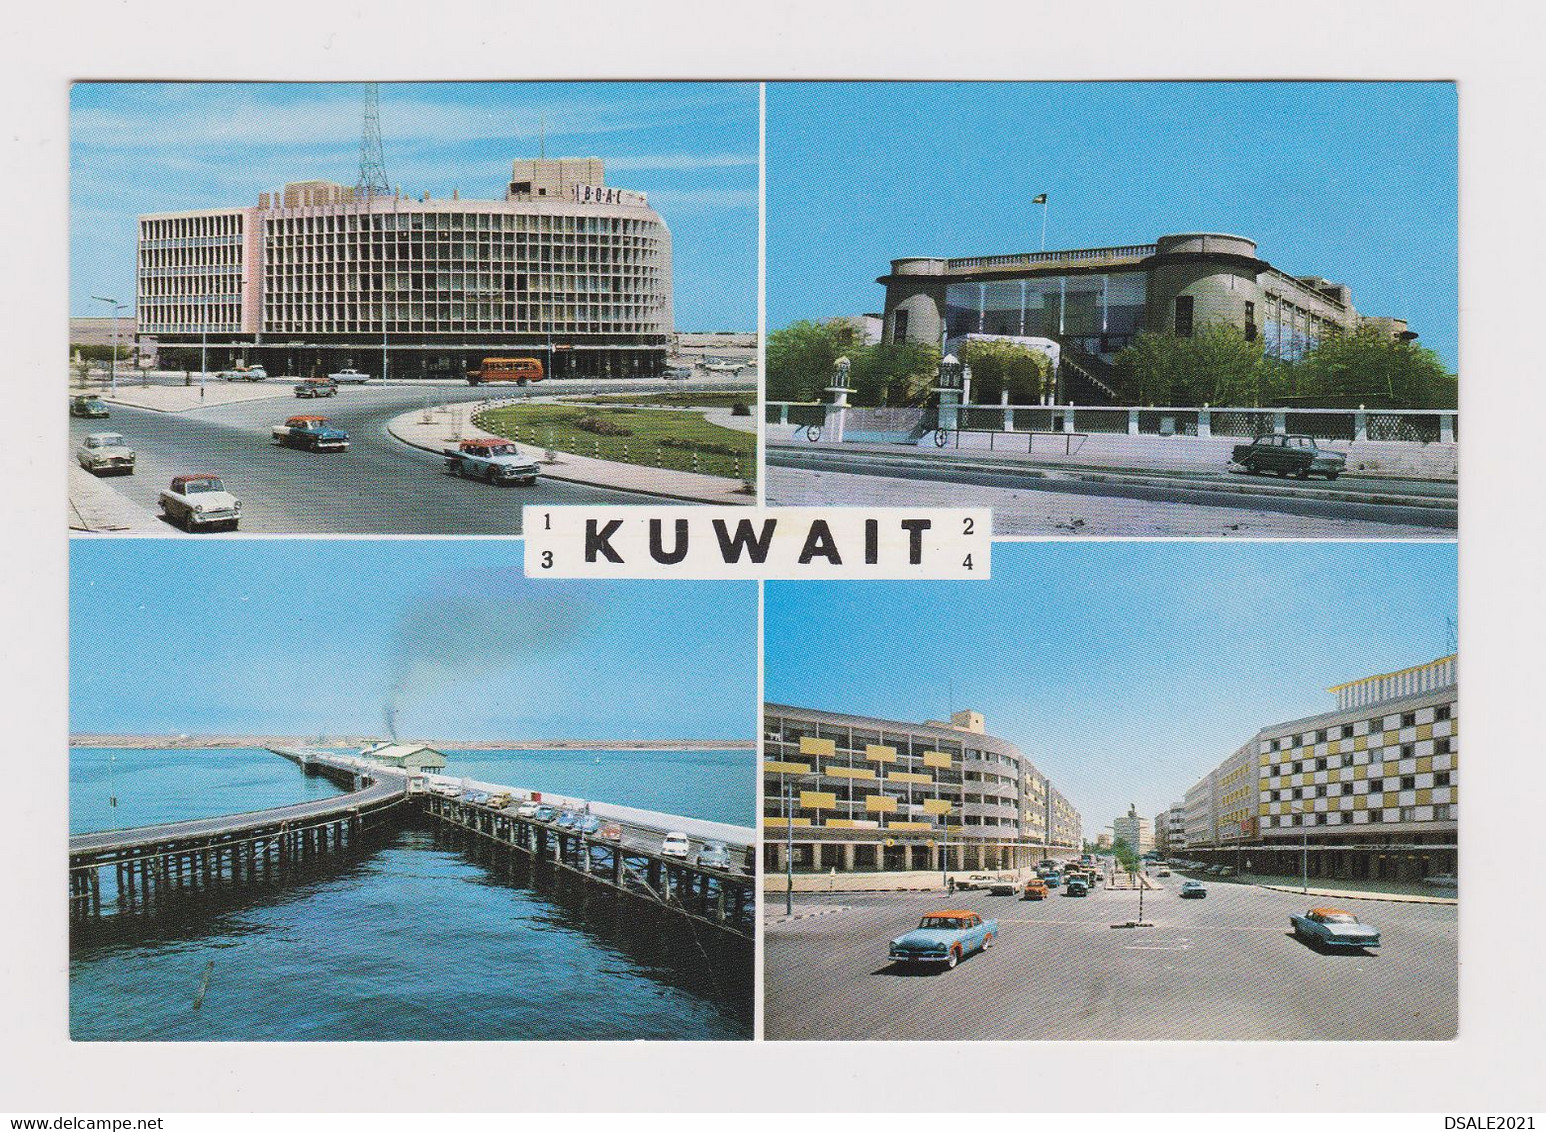 KUWAIT Multy View Buildings, Cars Vintage Photo Postcard (53281) - Kuwait